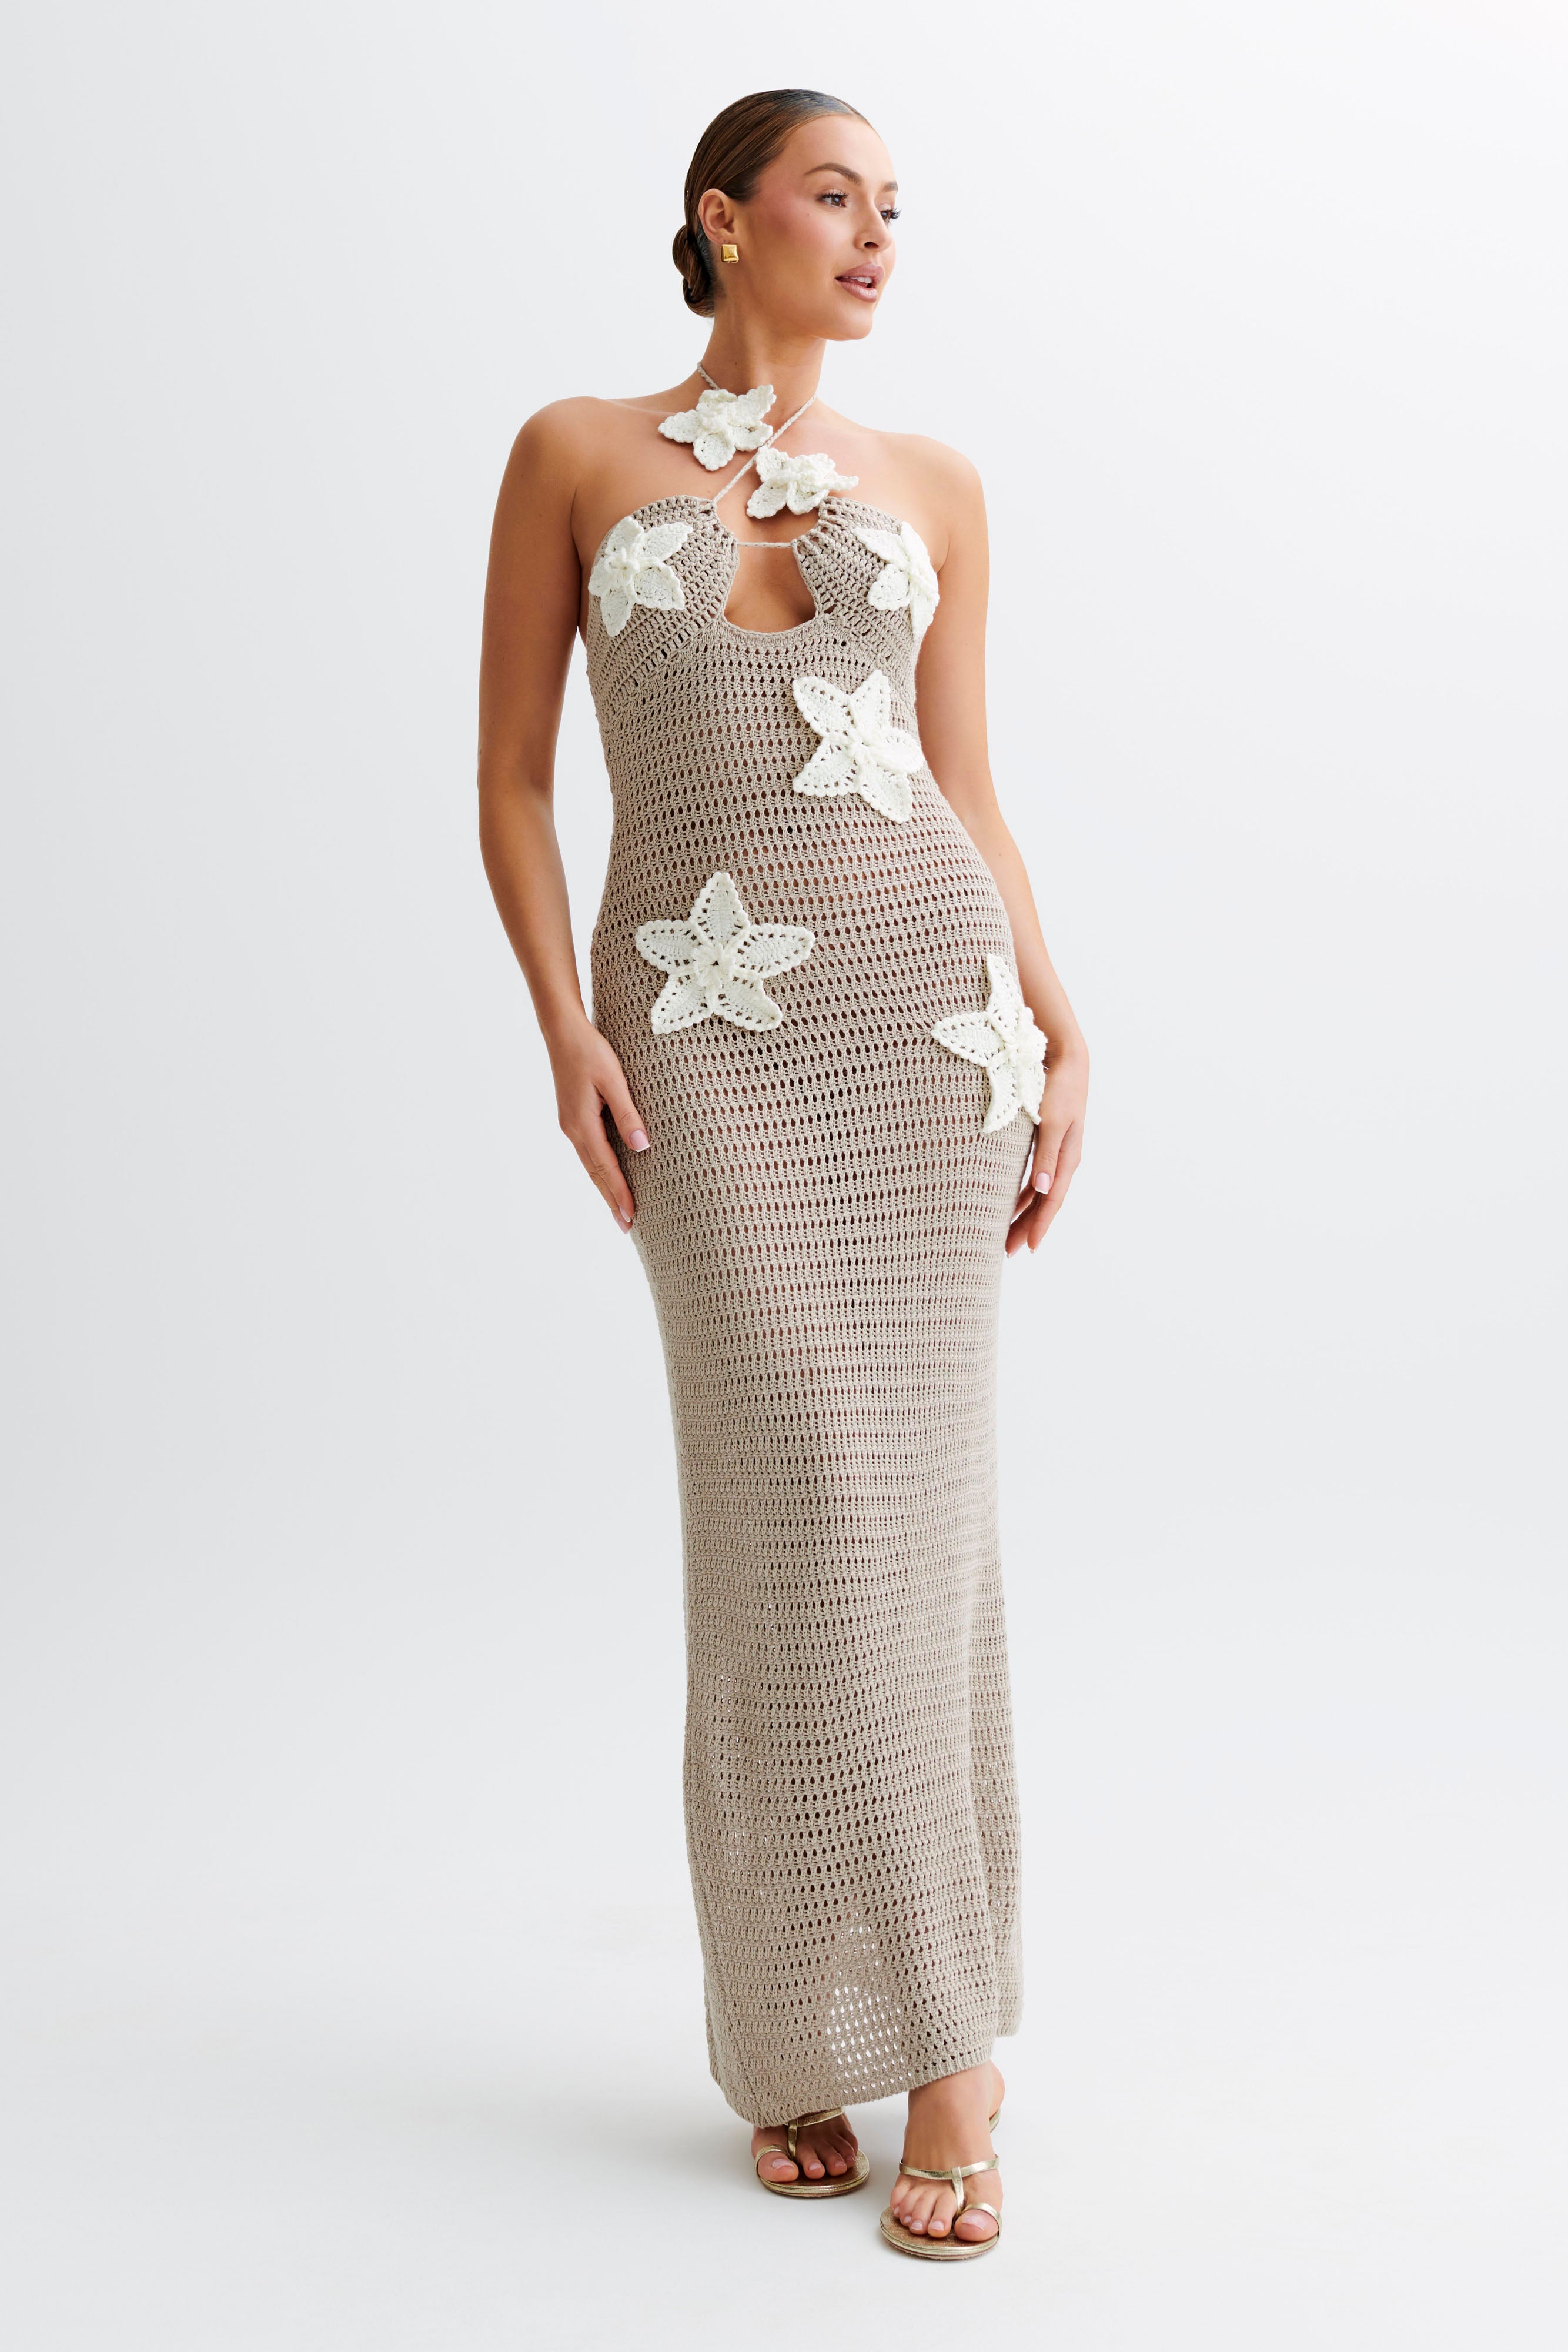 Simone™ - Crocheted Maxi Dress